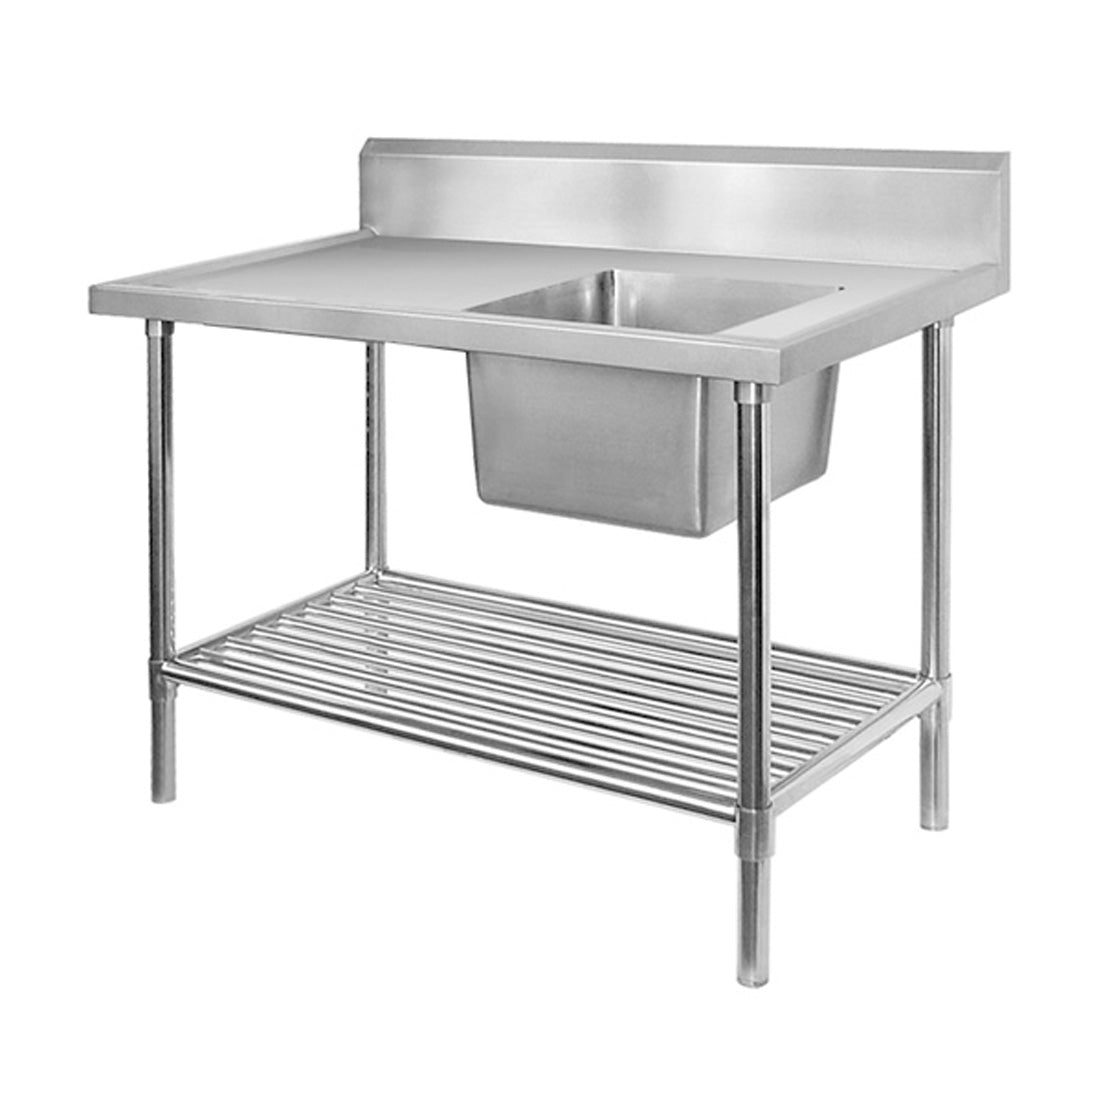 Modular Systems Single Right Sink Bench with Pot Undershelf 1800x700x900 SSB7-1800R/A